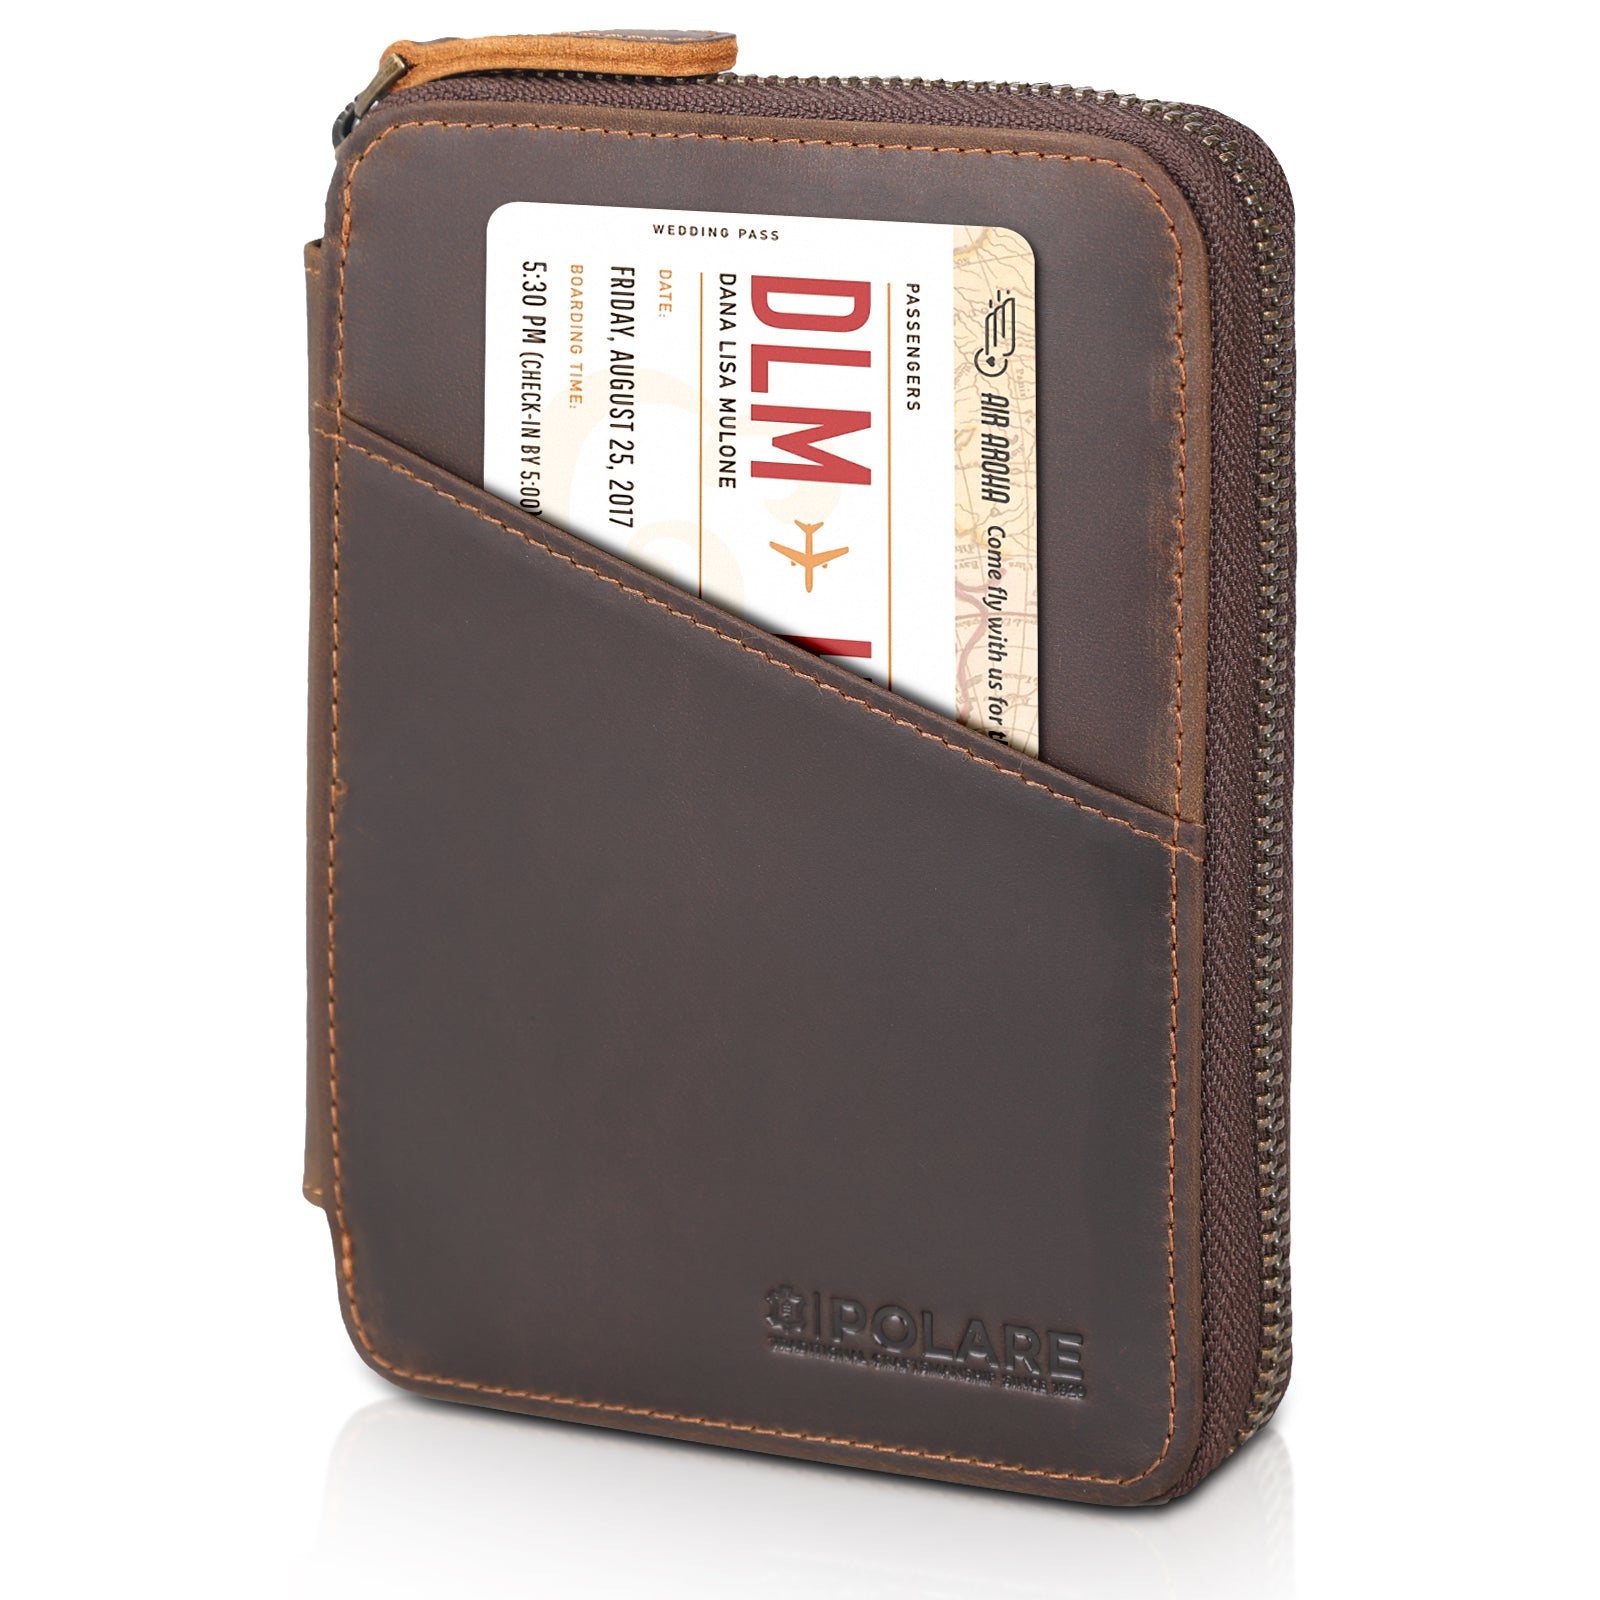 Polare Full Grain Leather Travel Passport Wallet RFID Blocking Passport Holder Soft Bifold Cover Case with YKK Zipper